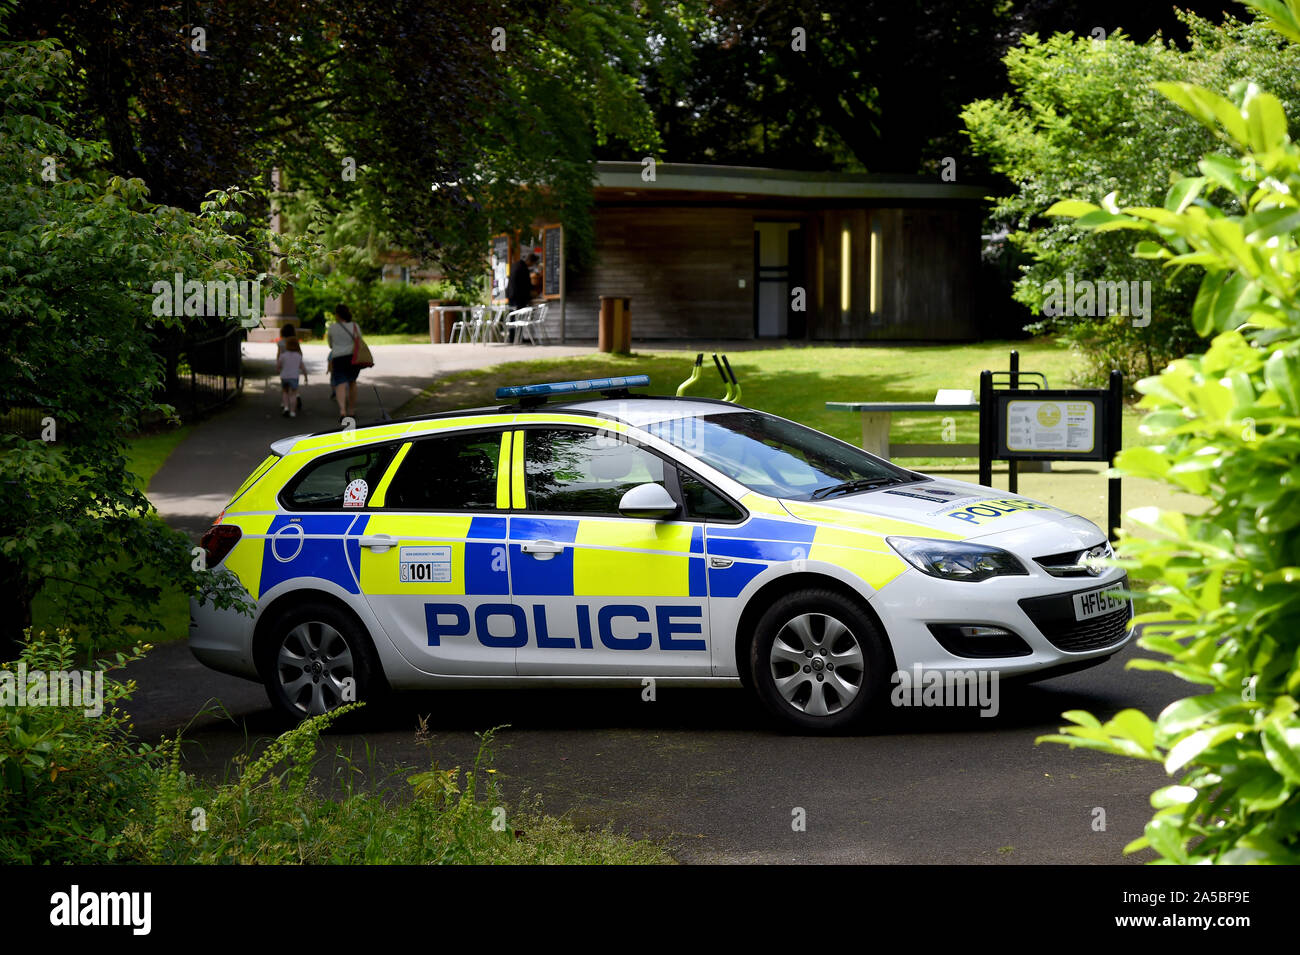 Police car, England Stock Photo